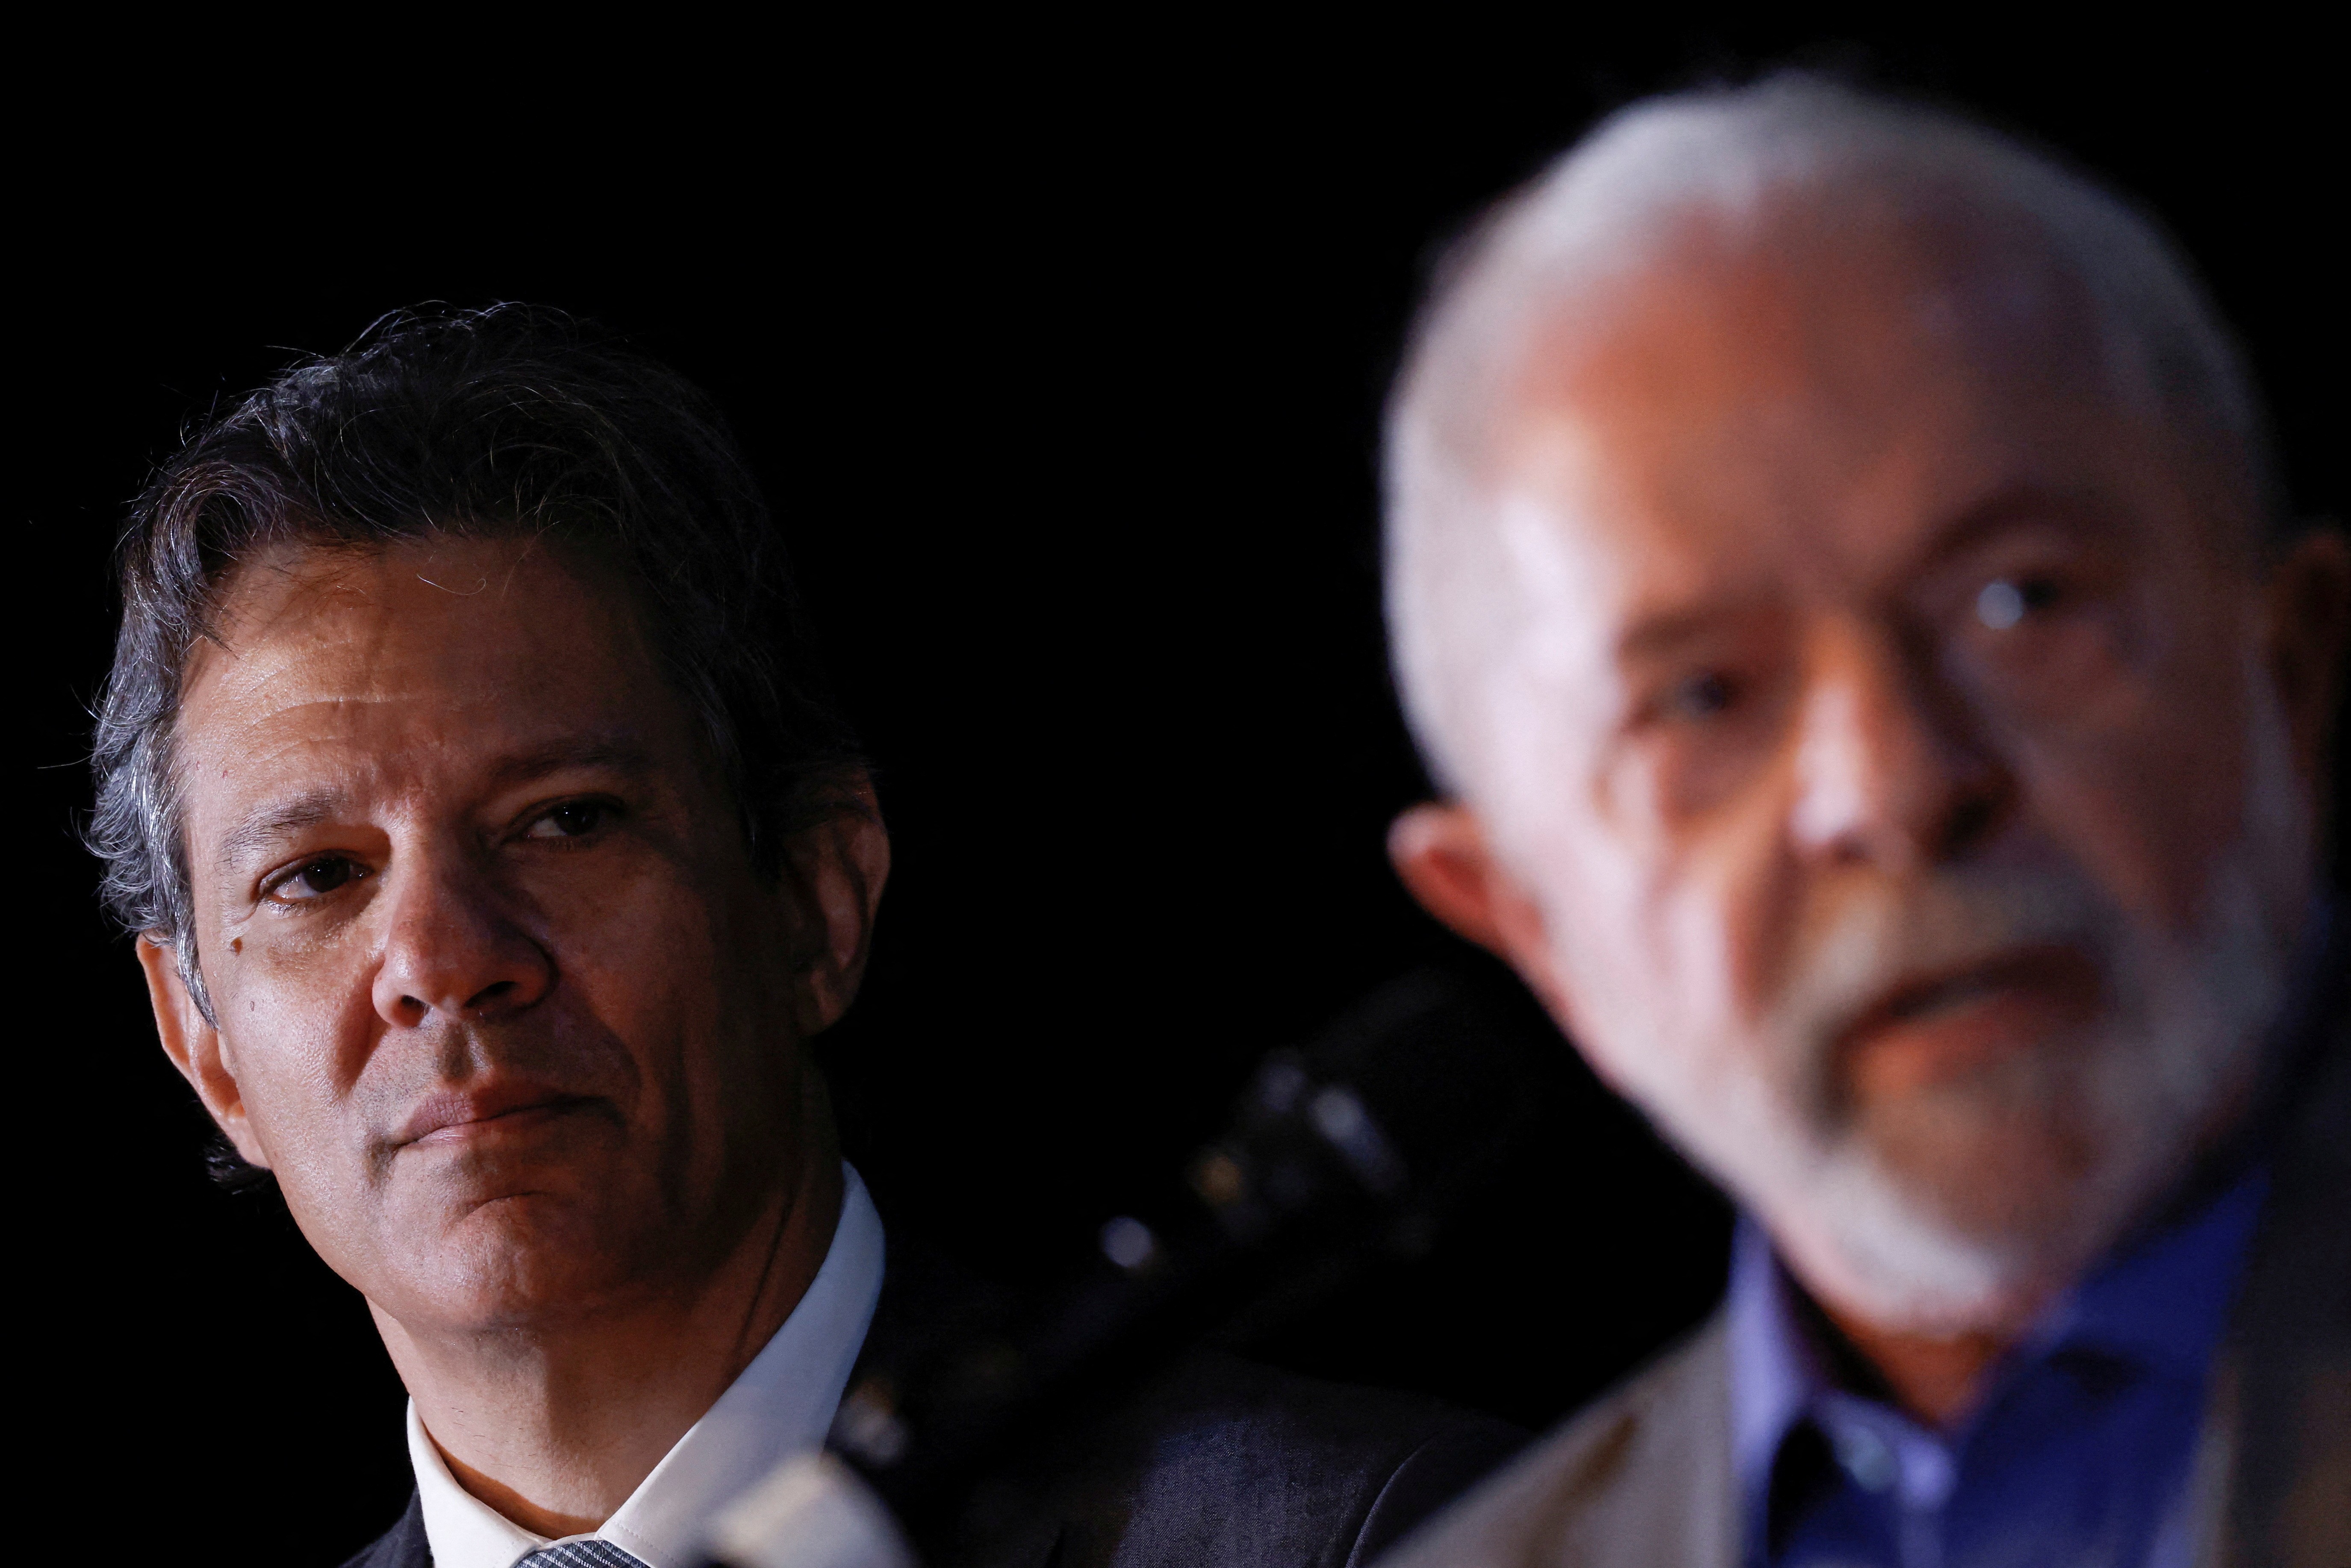 Sinais trocados: como analistas veem as diferenças de discurso entre Lula e Haddad na economia